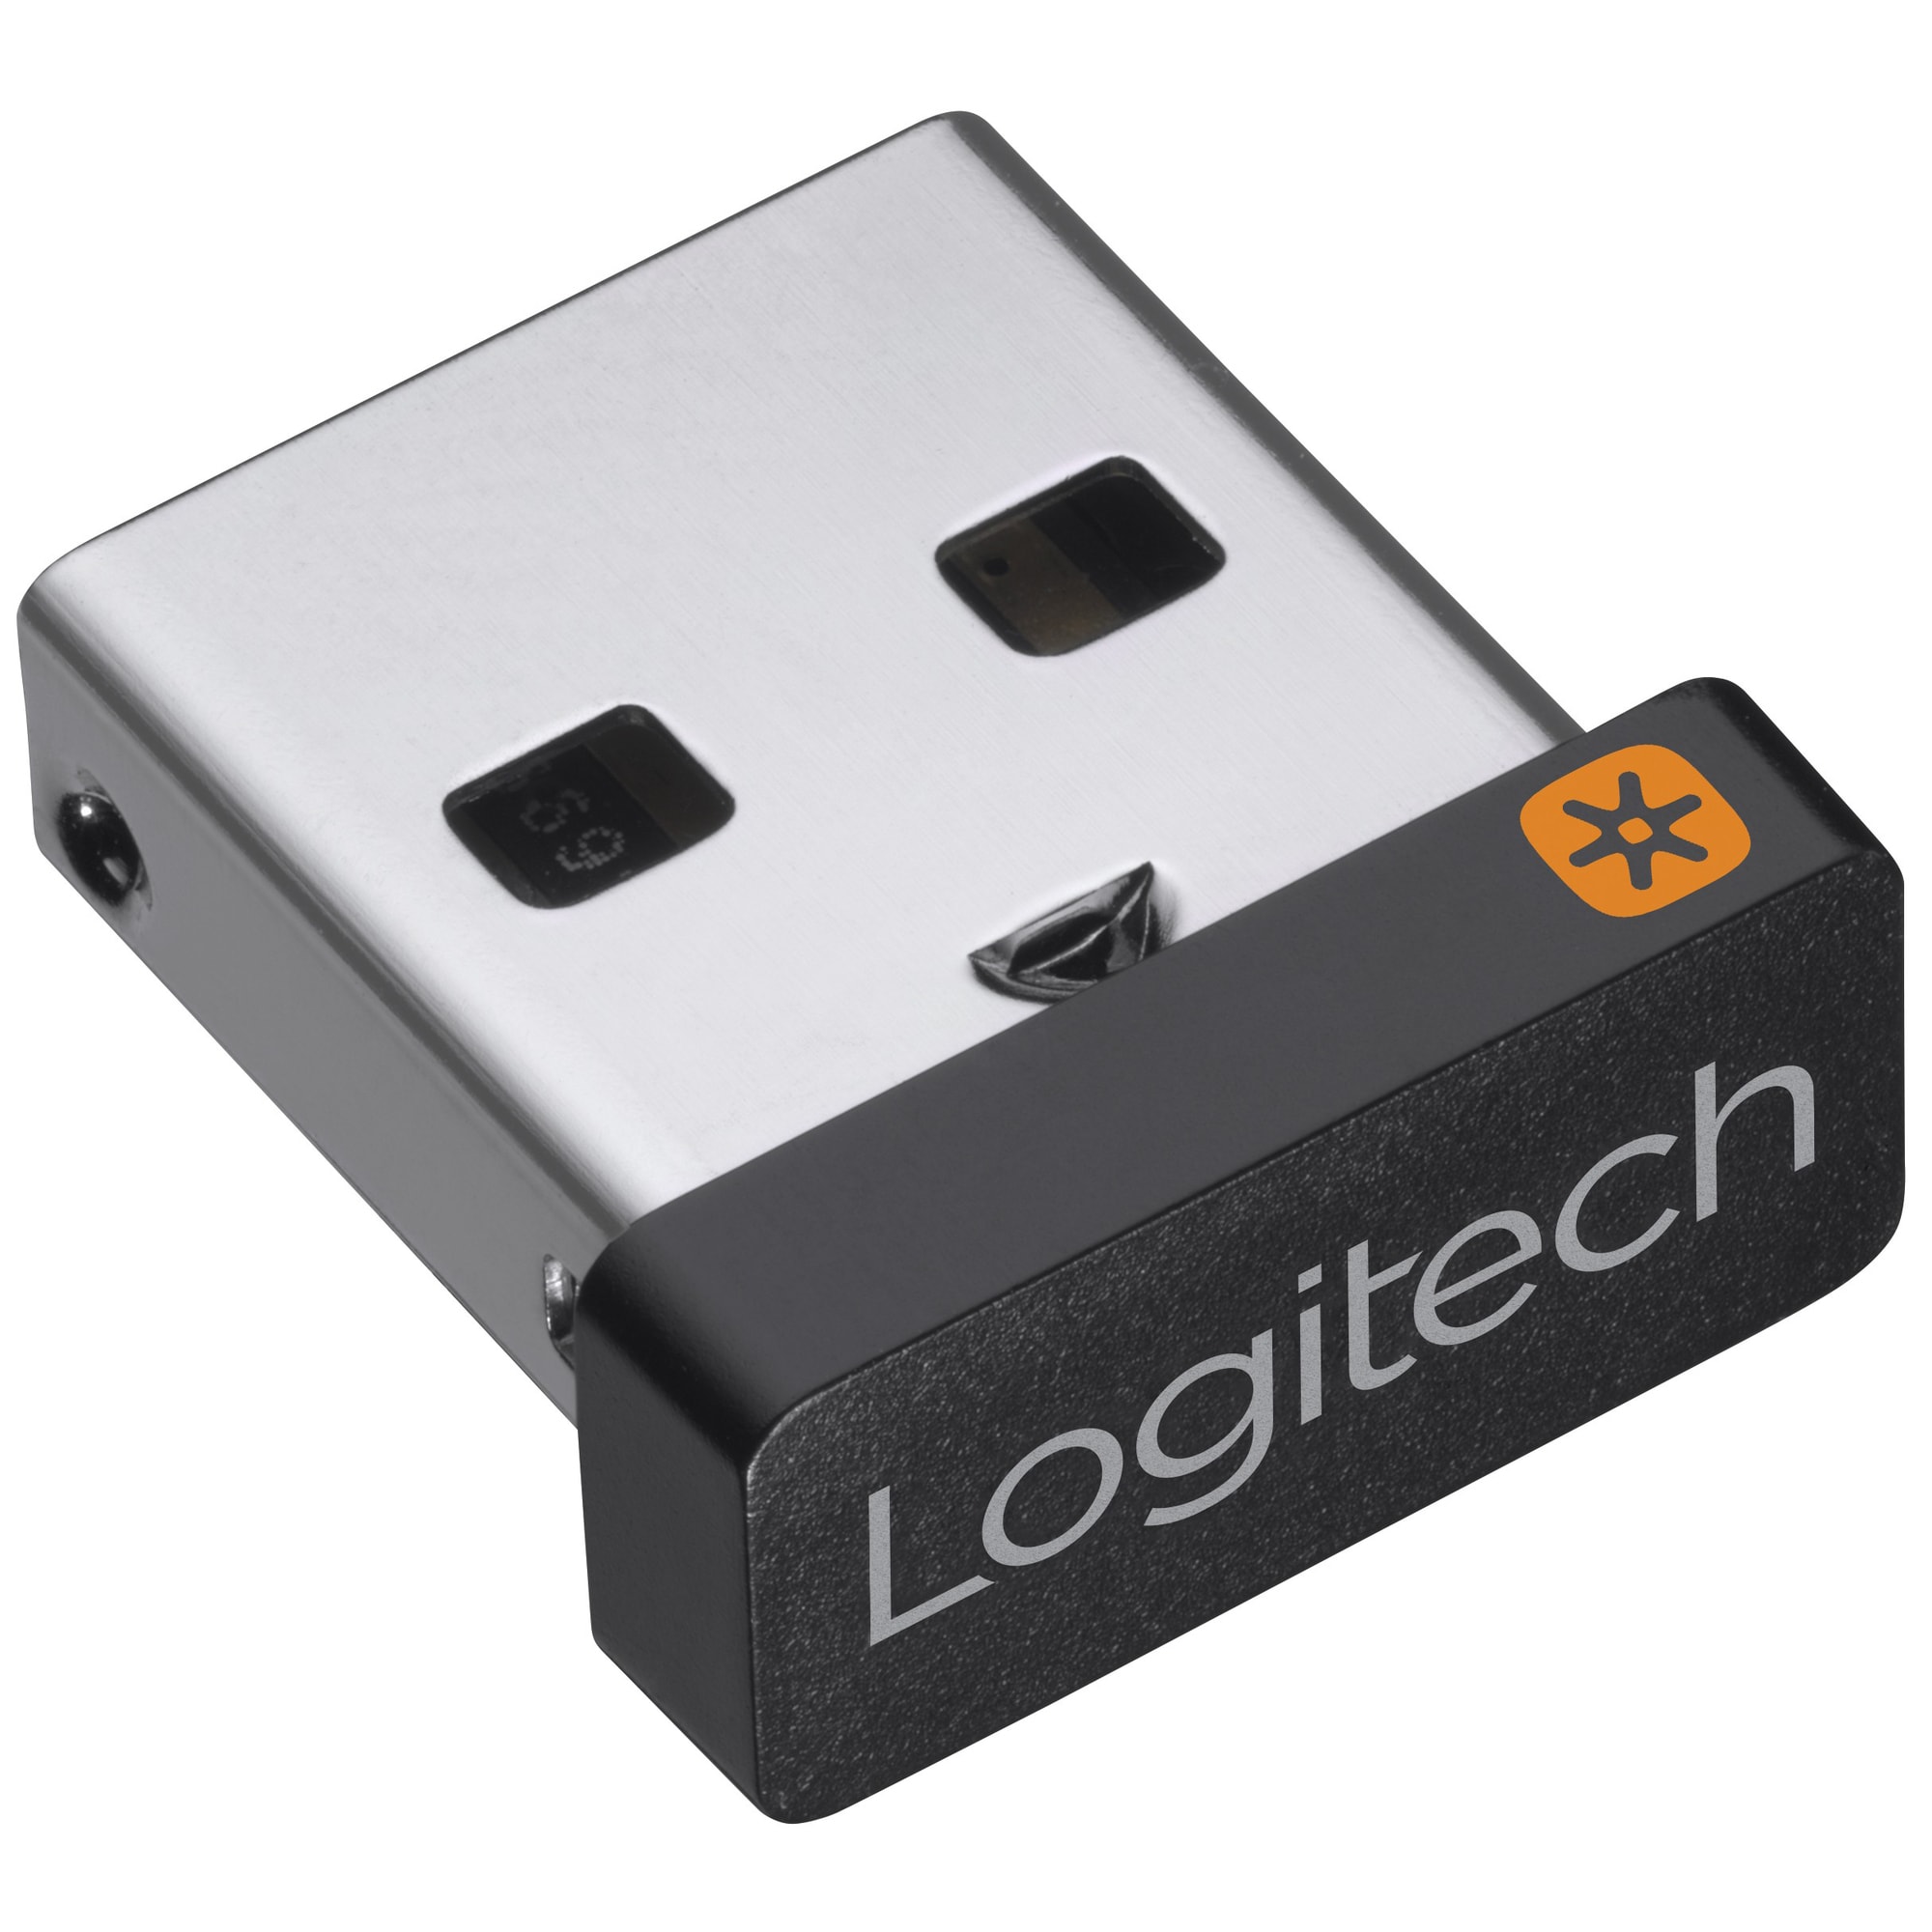 Logitech Unifying trådløs USB receiver | Elgiganten